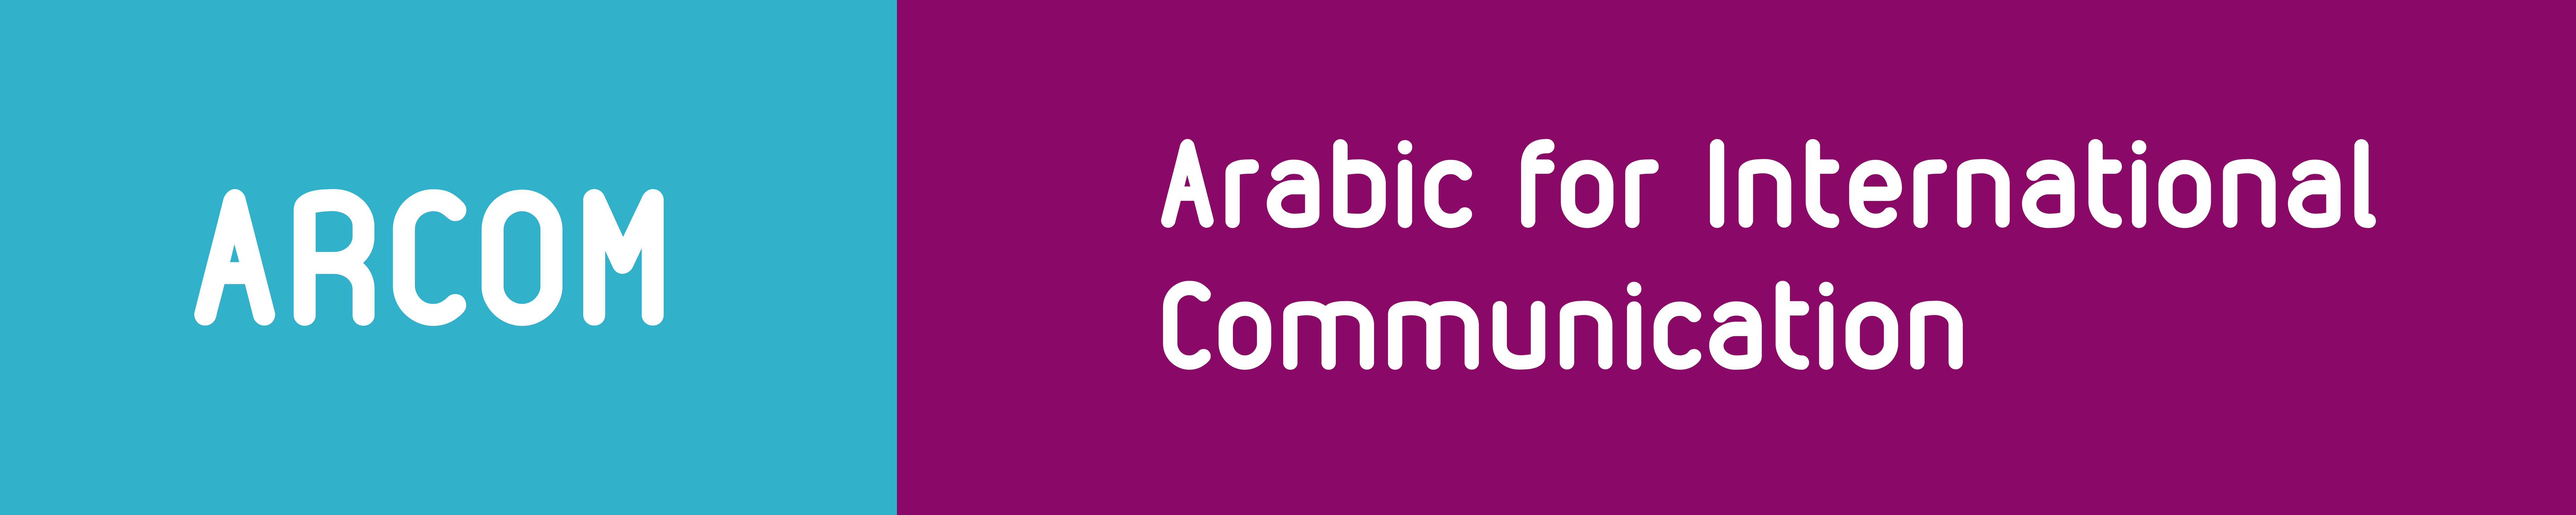 Bachelor of Arts (Hons.) in Arabic for International Communication